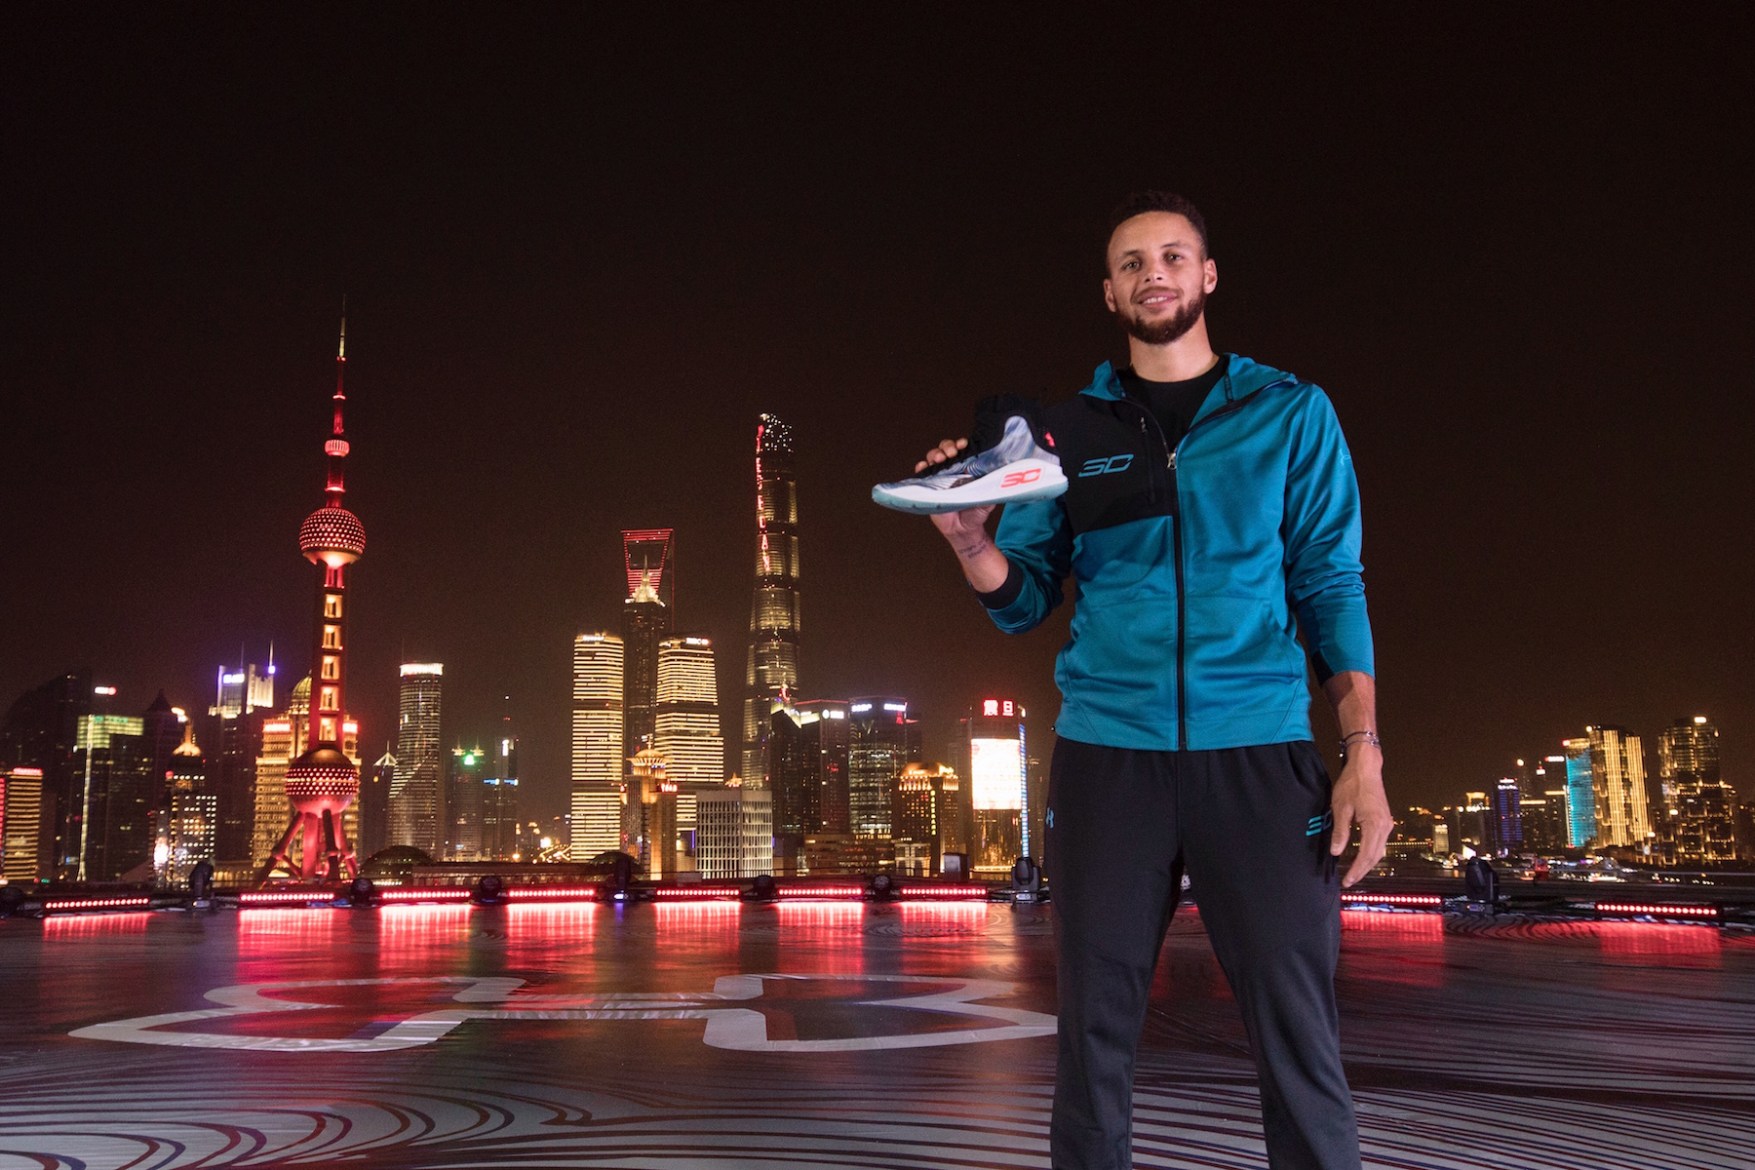 Stephen Curry 亮相上海发布全新签名球鞋 Under Armour Curry 4 中国配色